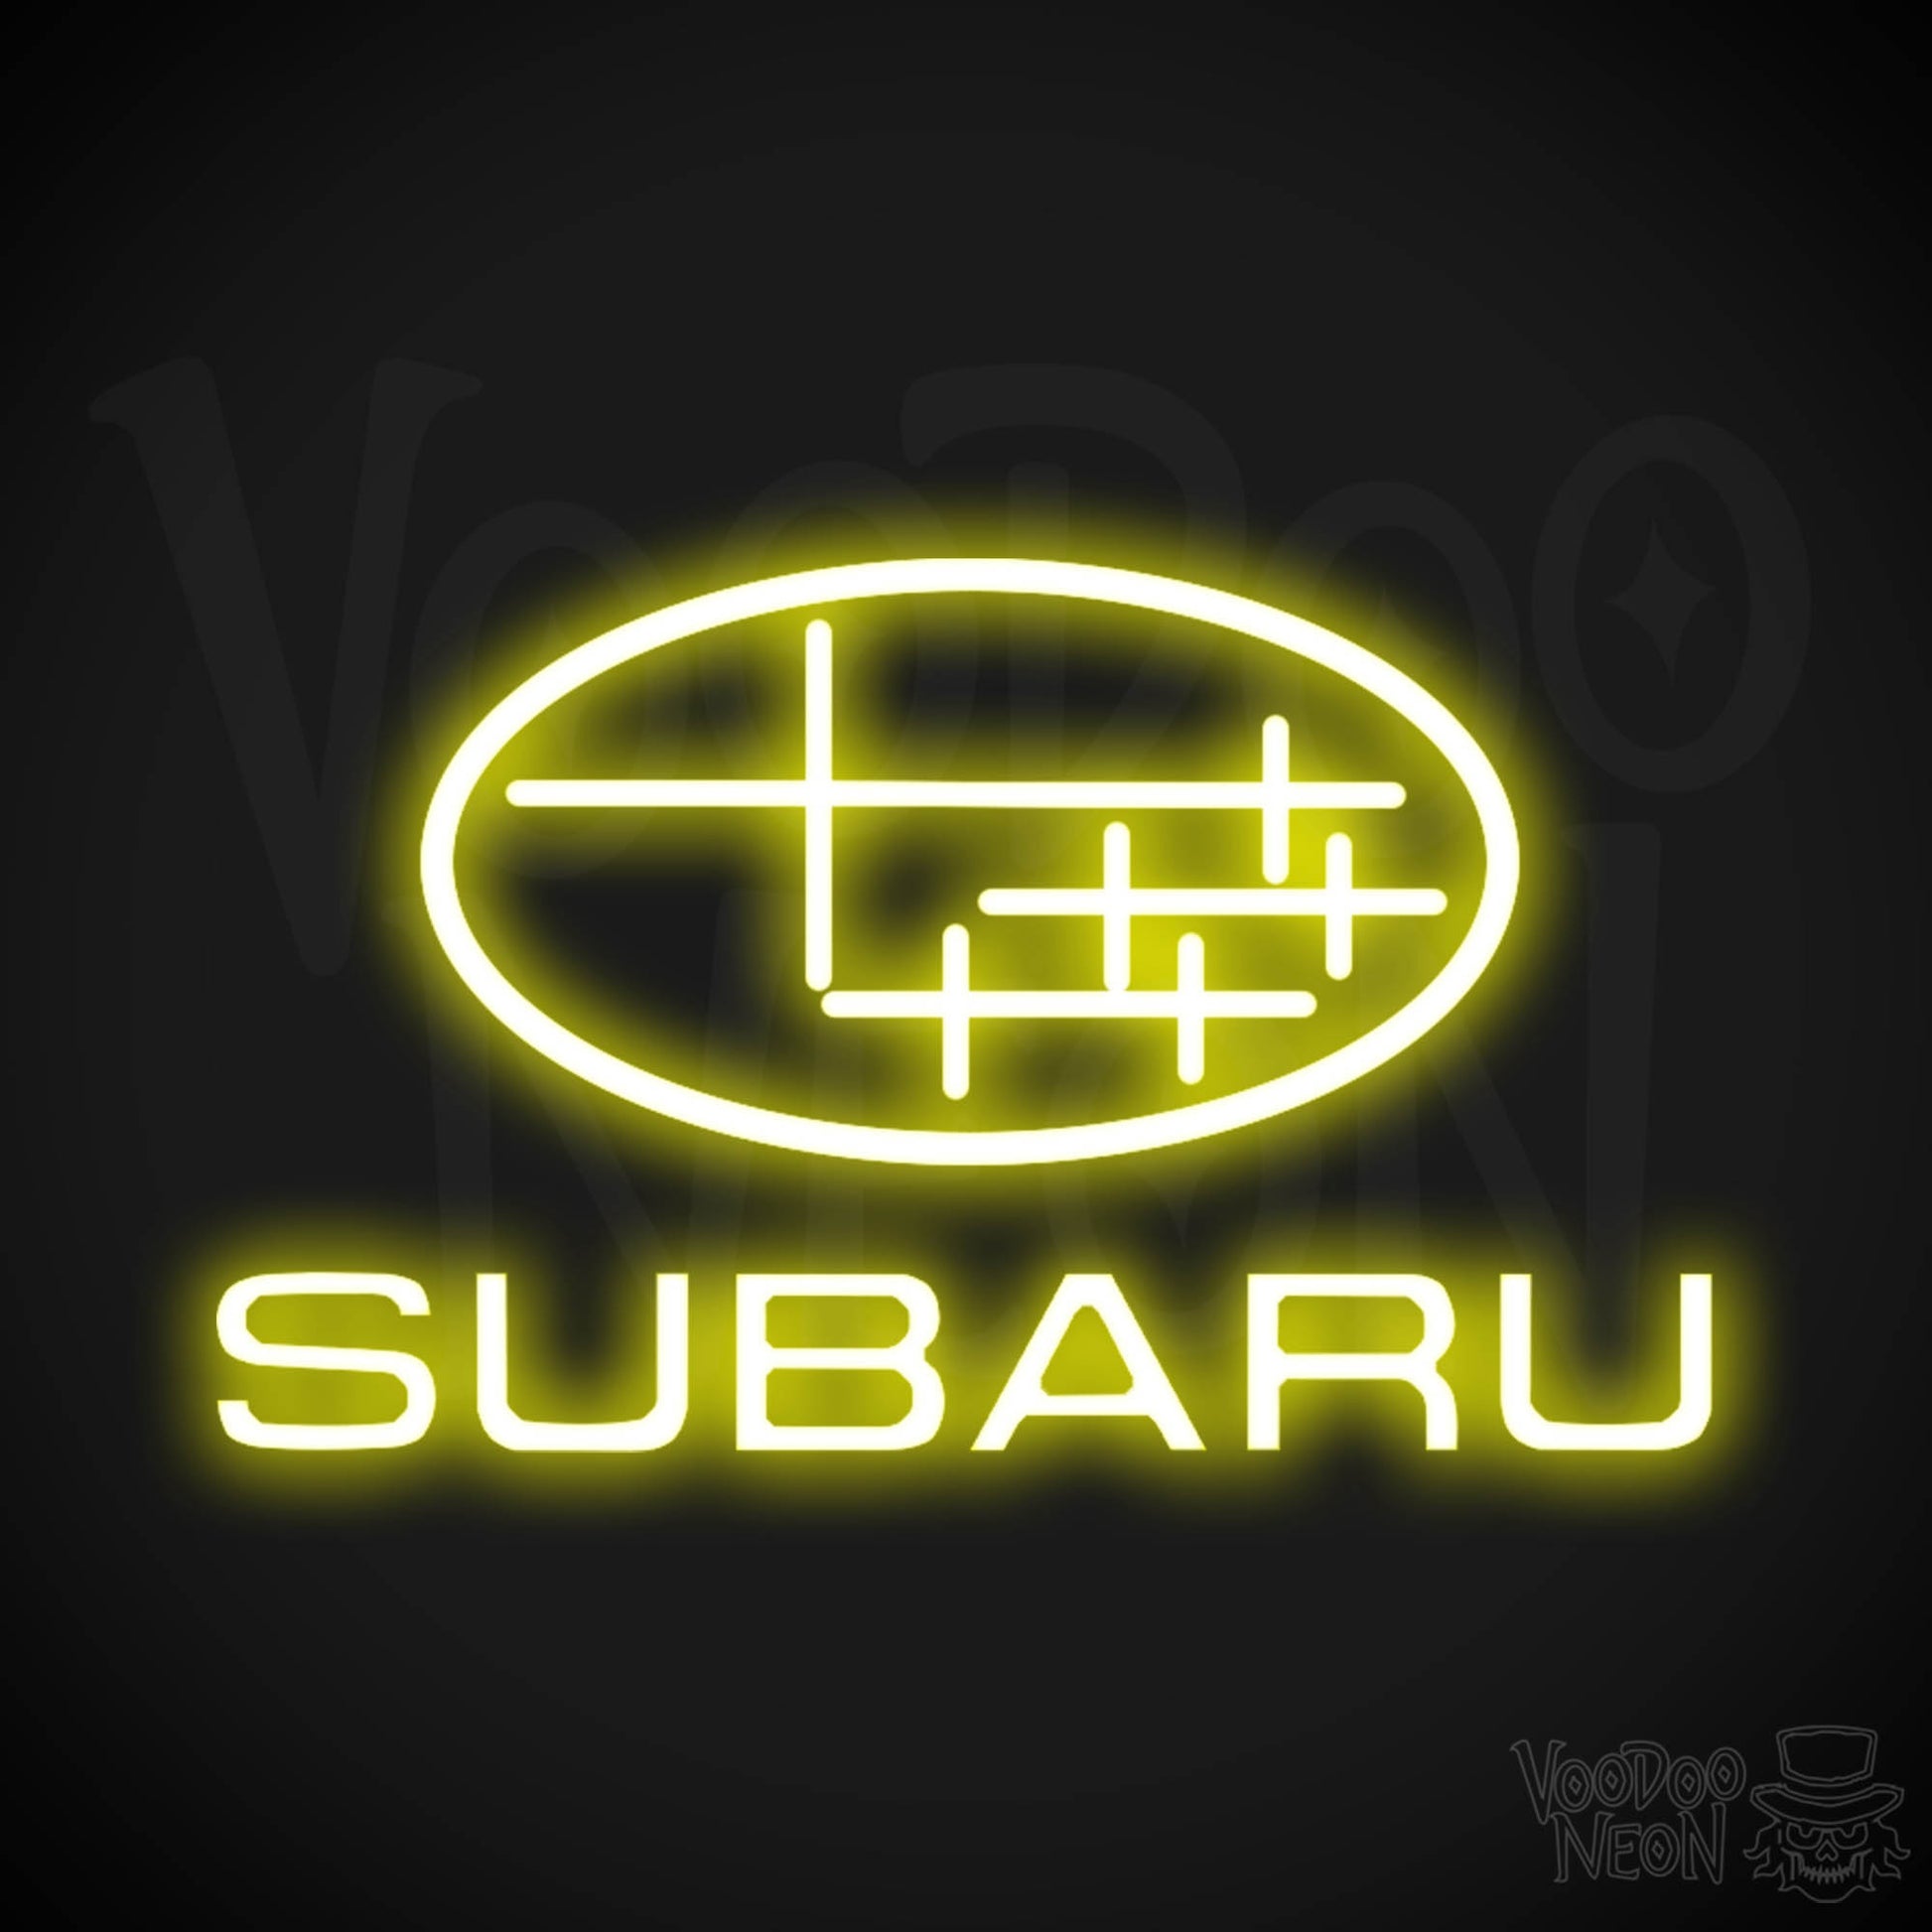 Subaru Neon Sign - Subaru Sign - Subaru Decor - Wall Art - Color Yellow